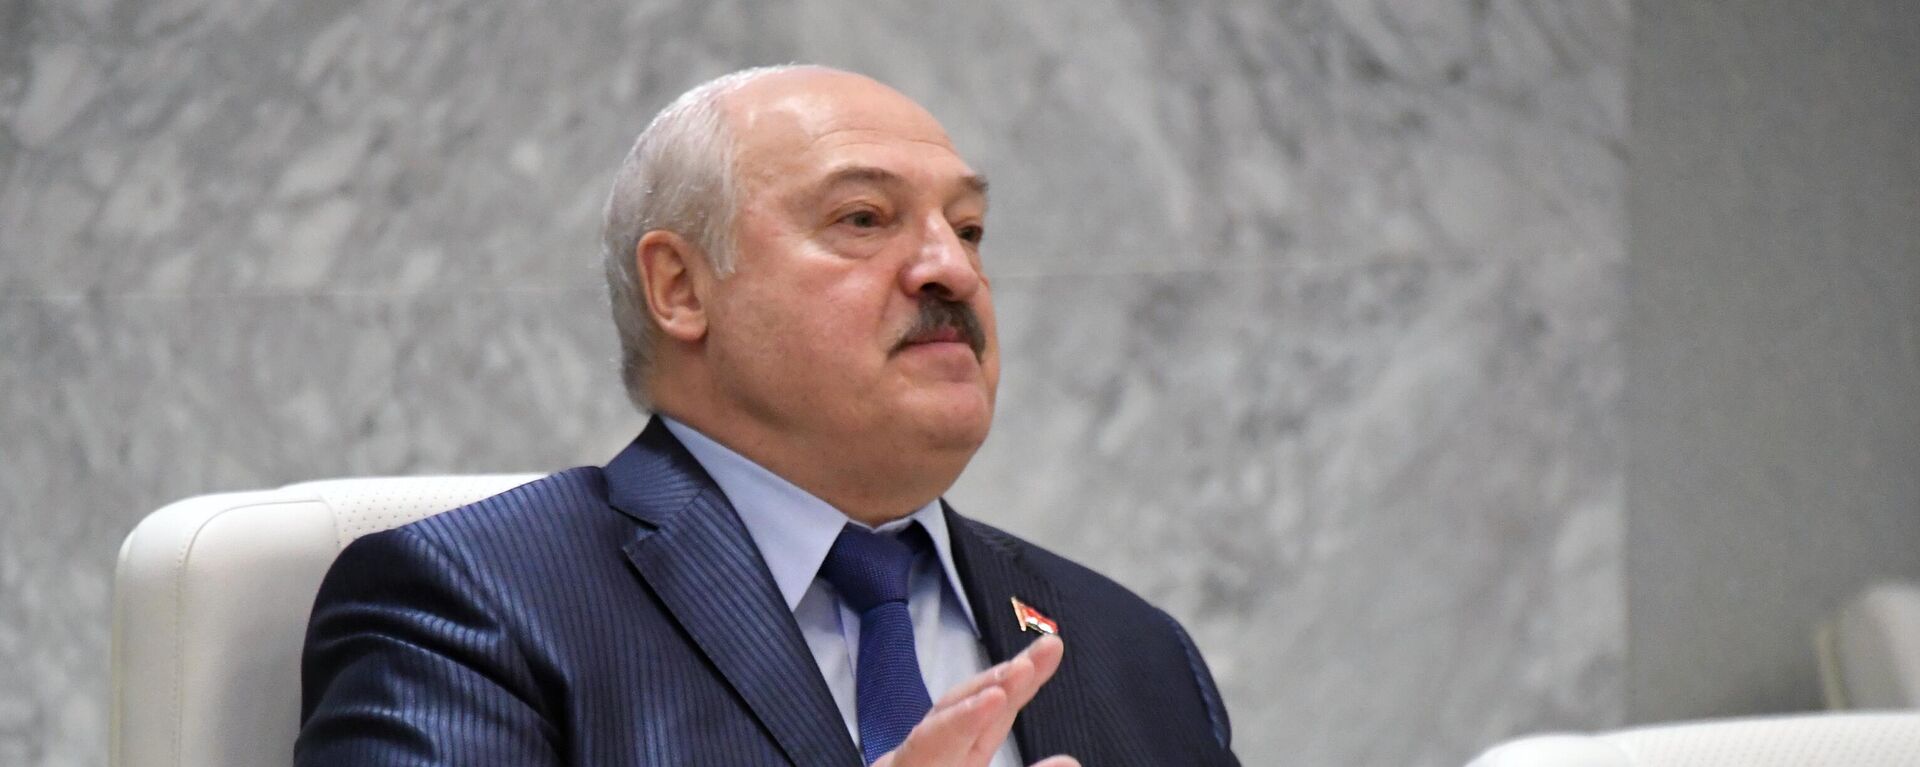 O presidente belarusso, Aleksandr Lukashenko, gesticula durante evento em Vladivostok, na Rússia, 13 de abril de 2022 - Sputnik Brasil, 1920, 18.09.2022